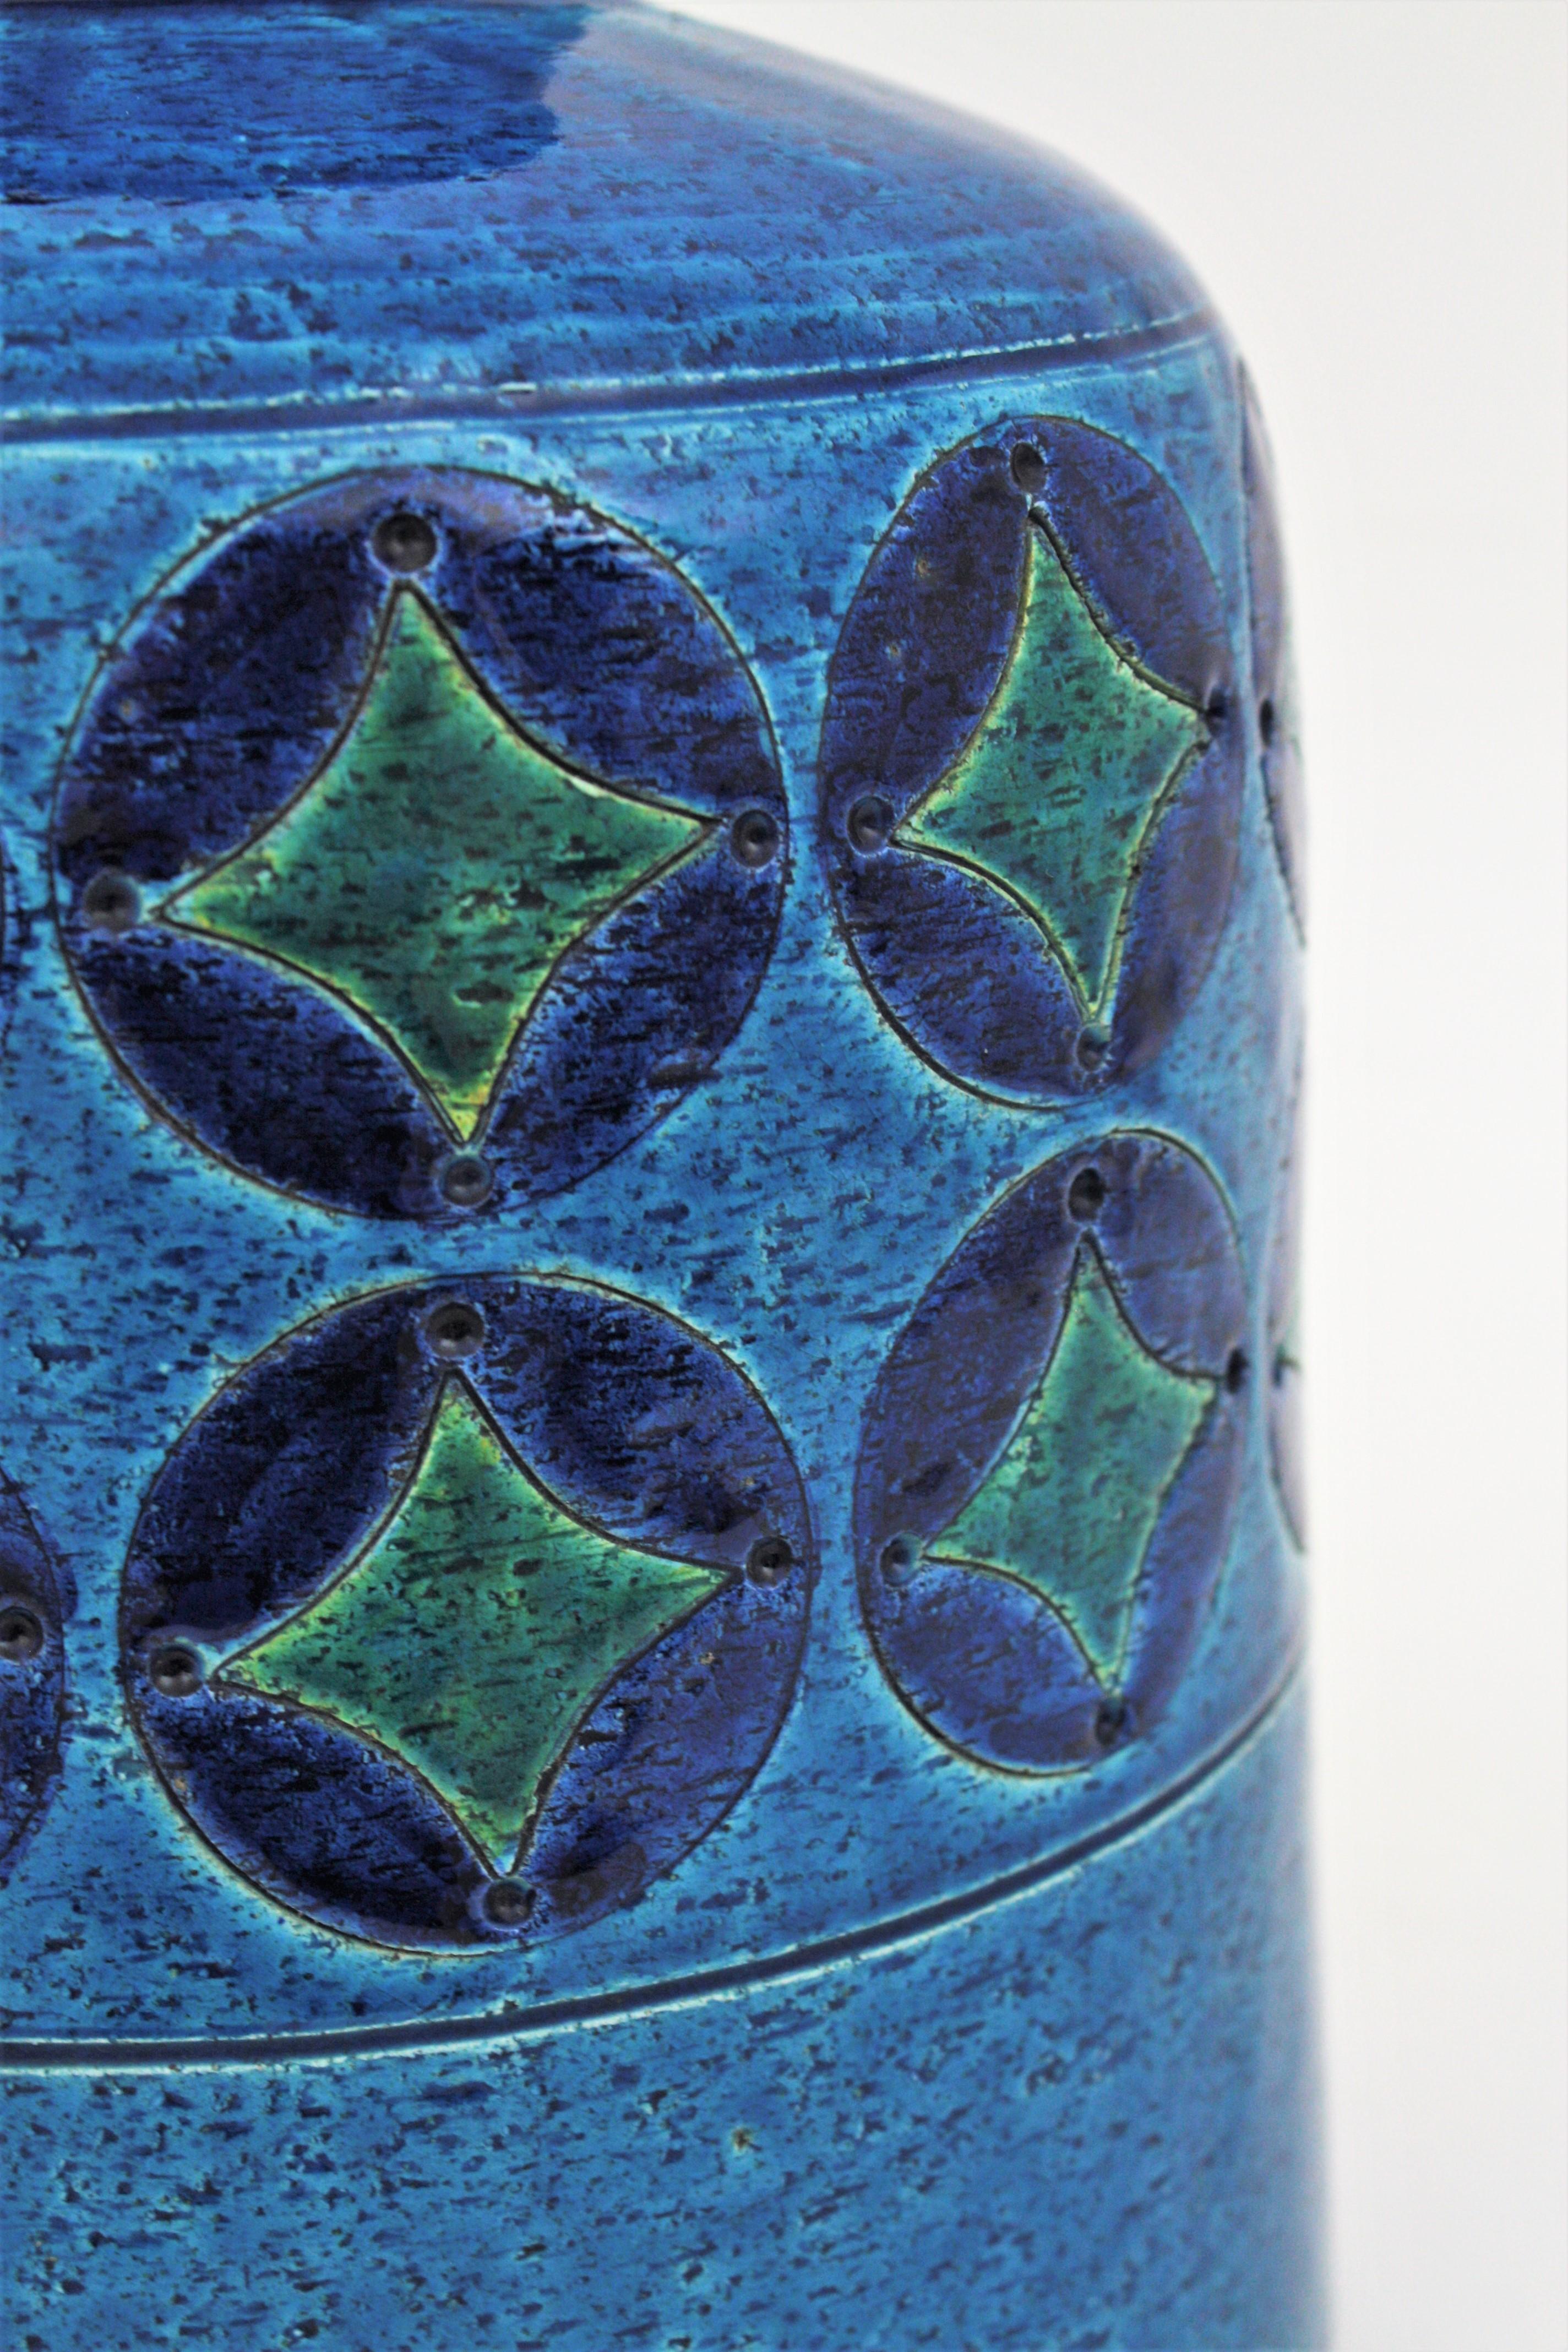 Bitossi Aldo Londi Blue Ceramic Large Bottle Vase with Circles & Rhombus Pattern For Sale 1